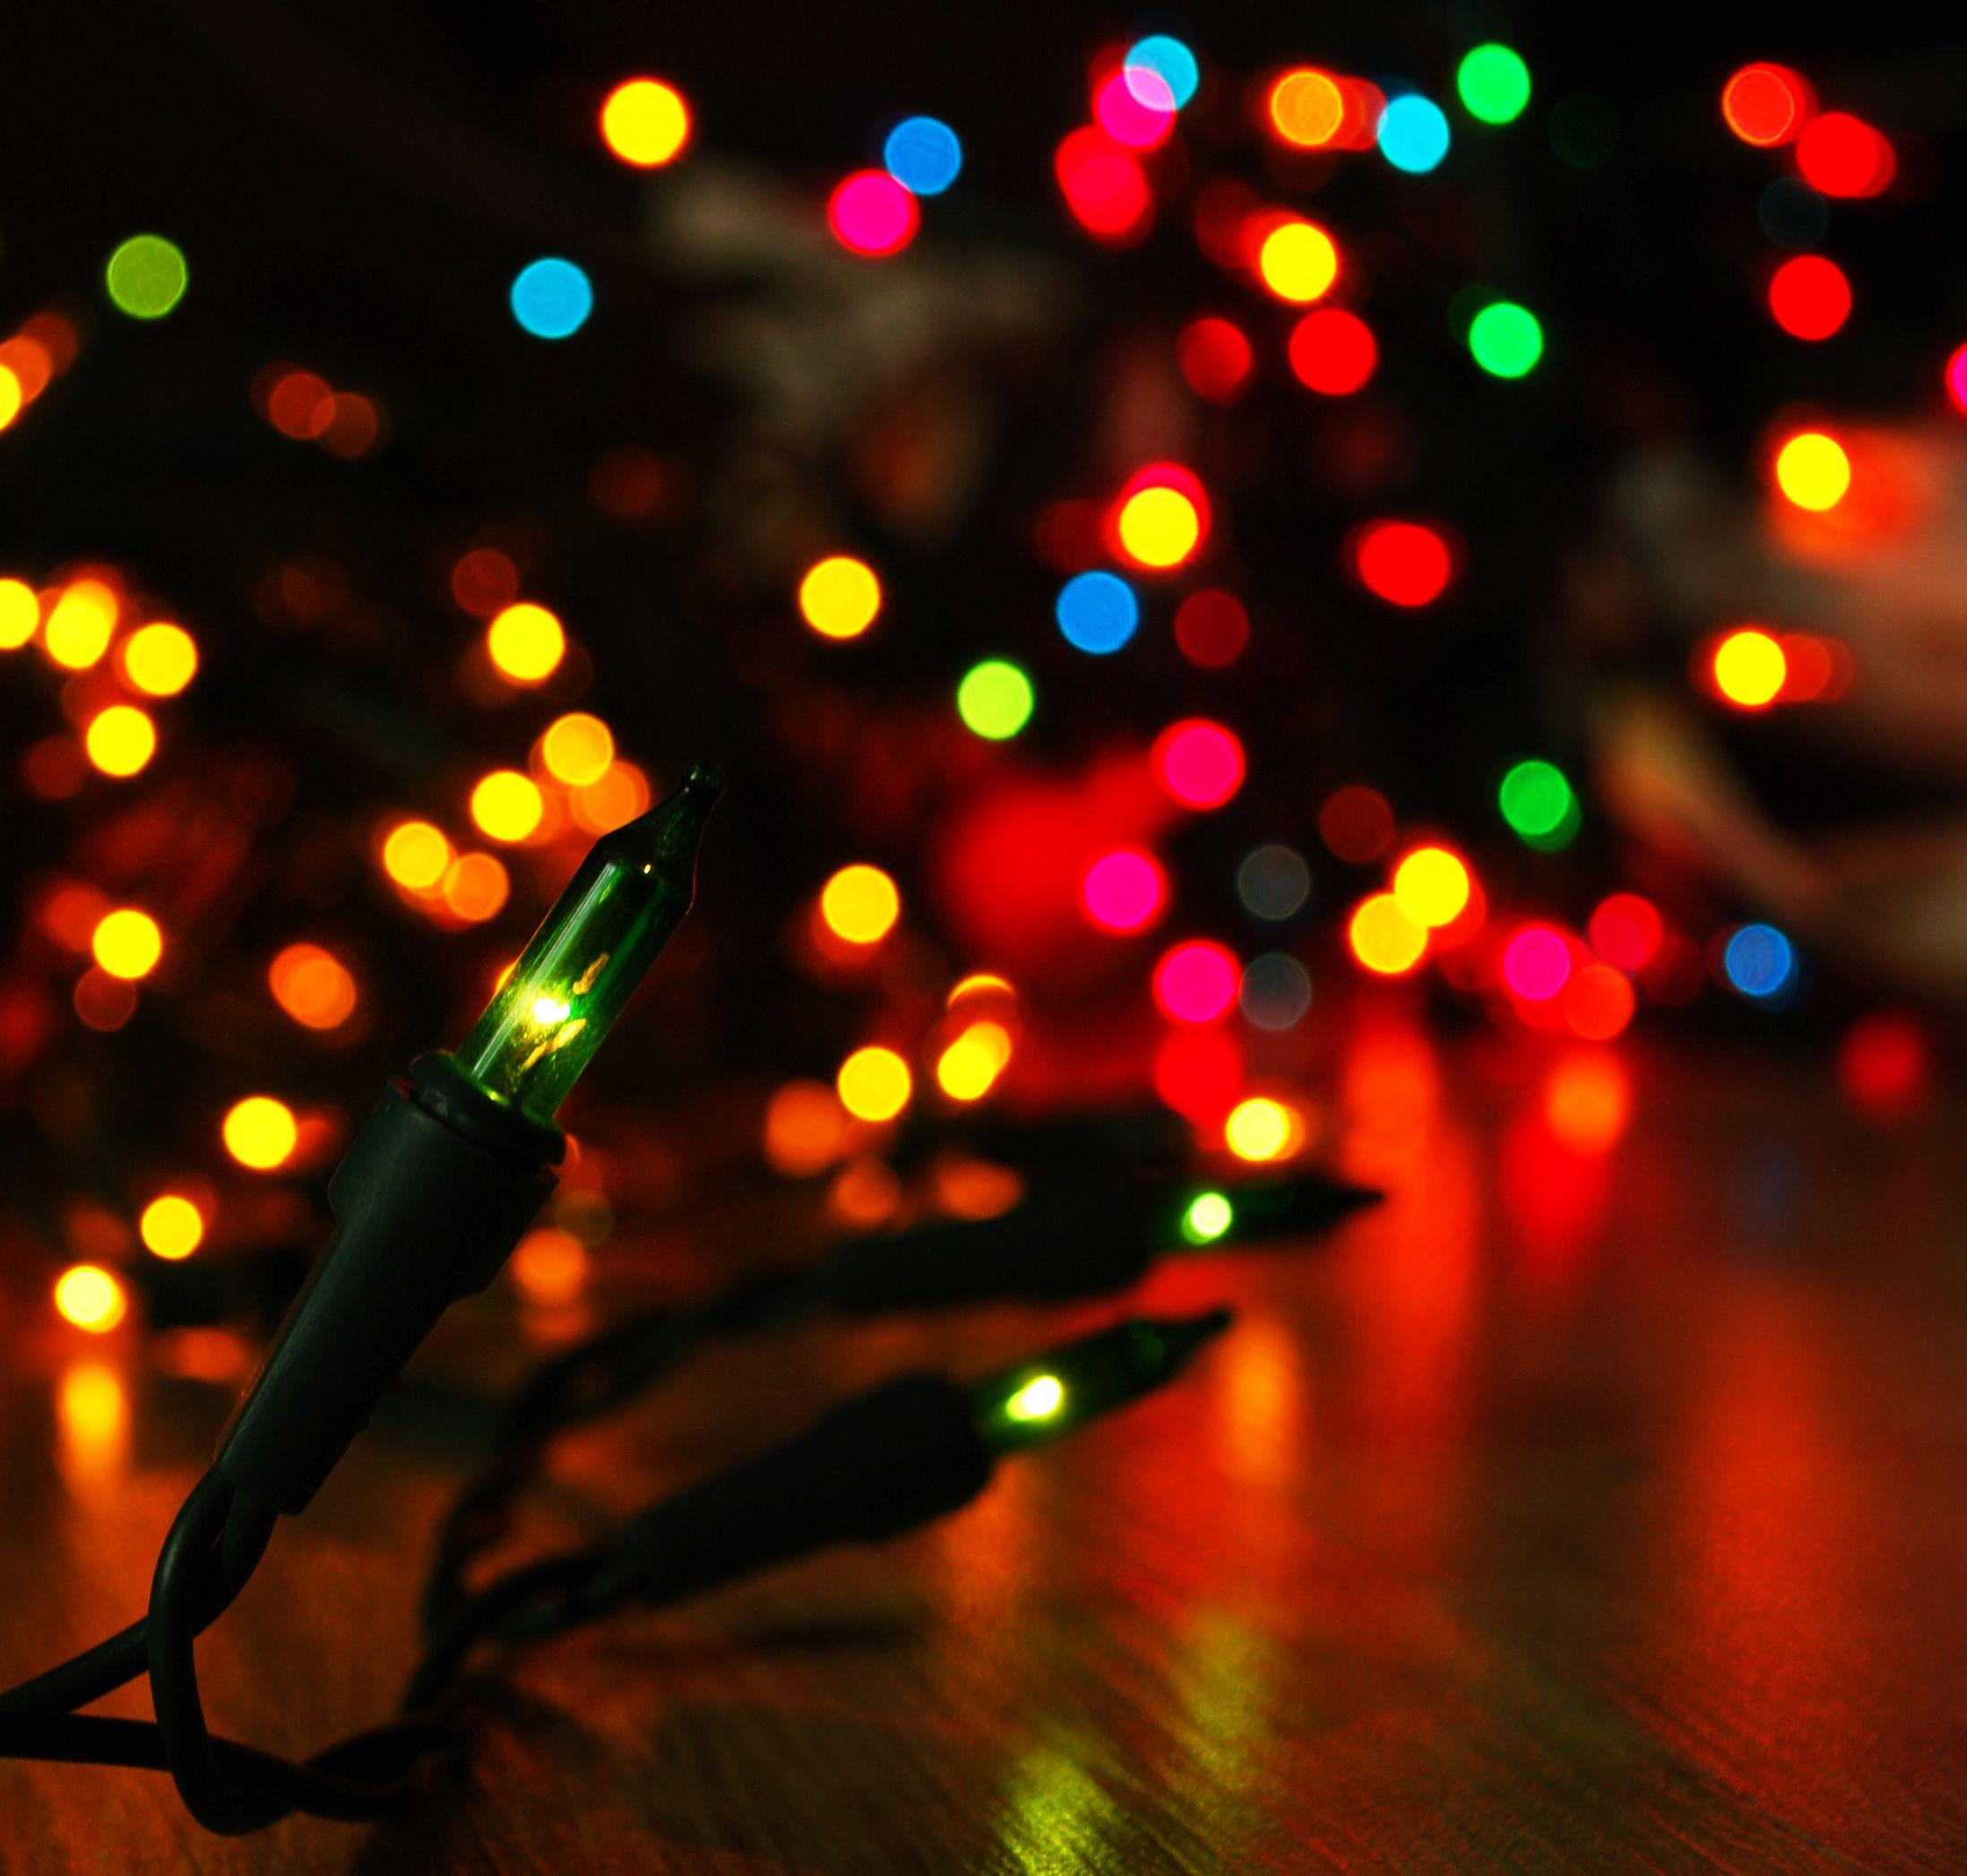 Download the Colorful Christmas Lights Wallpaper, Colorful Christmas